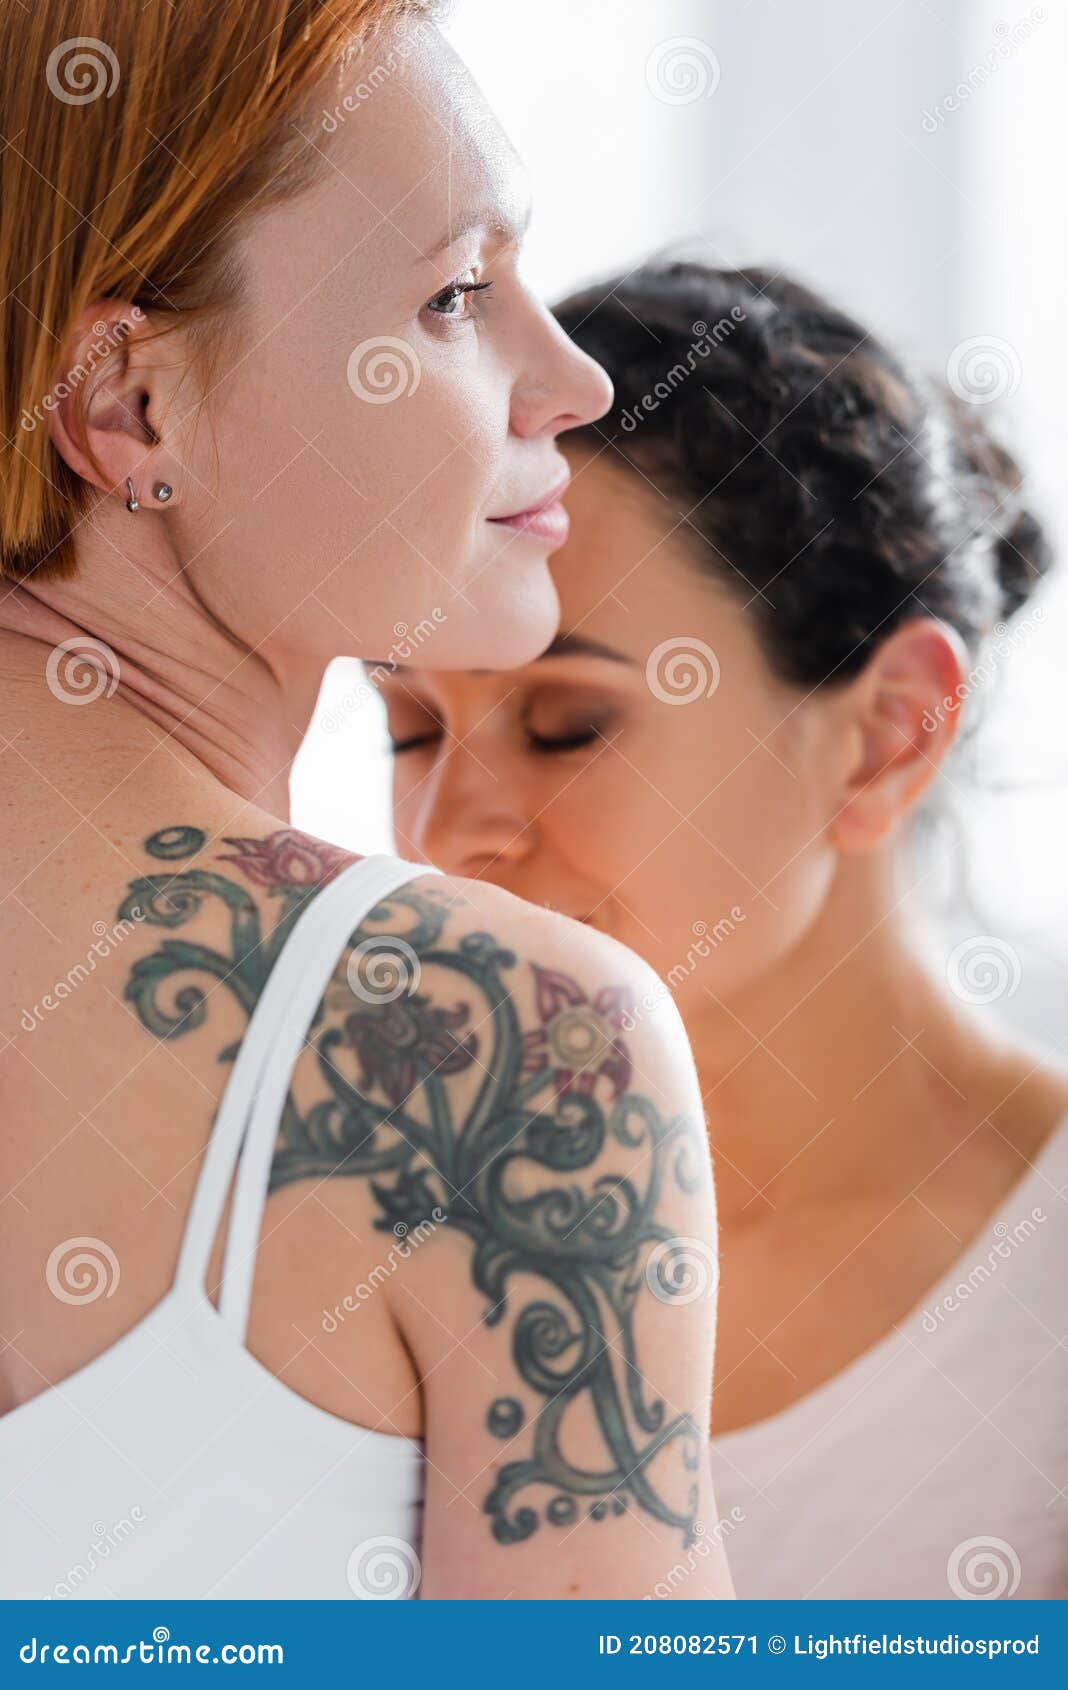 Tattooed lesbian young